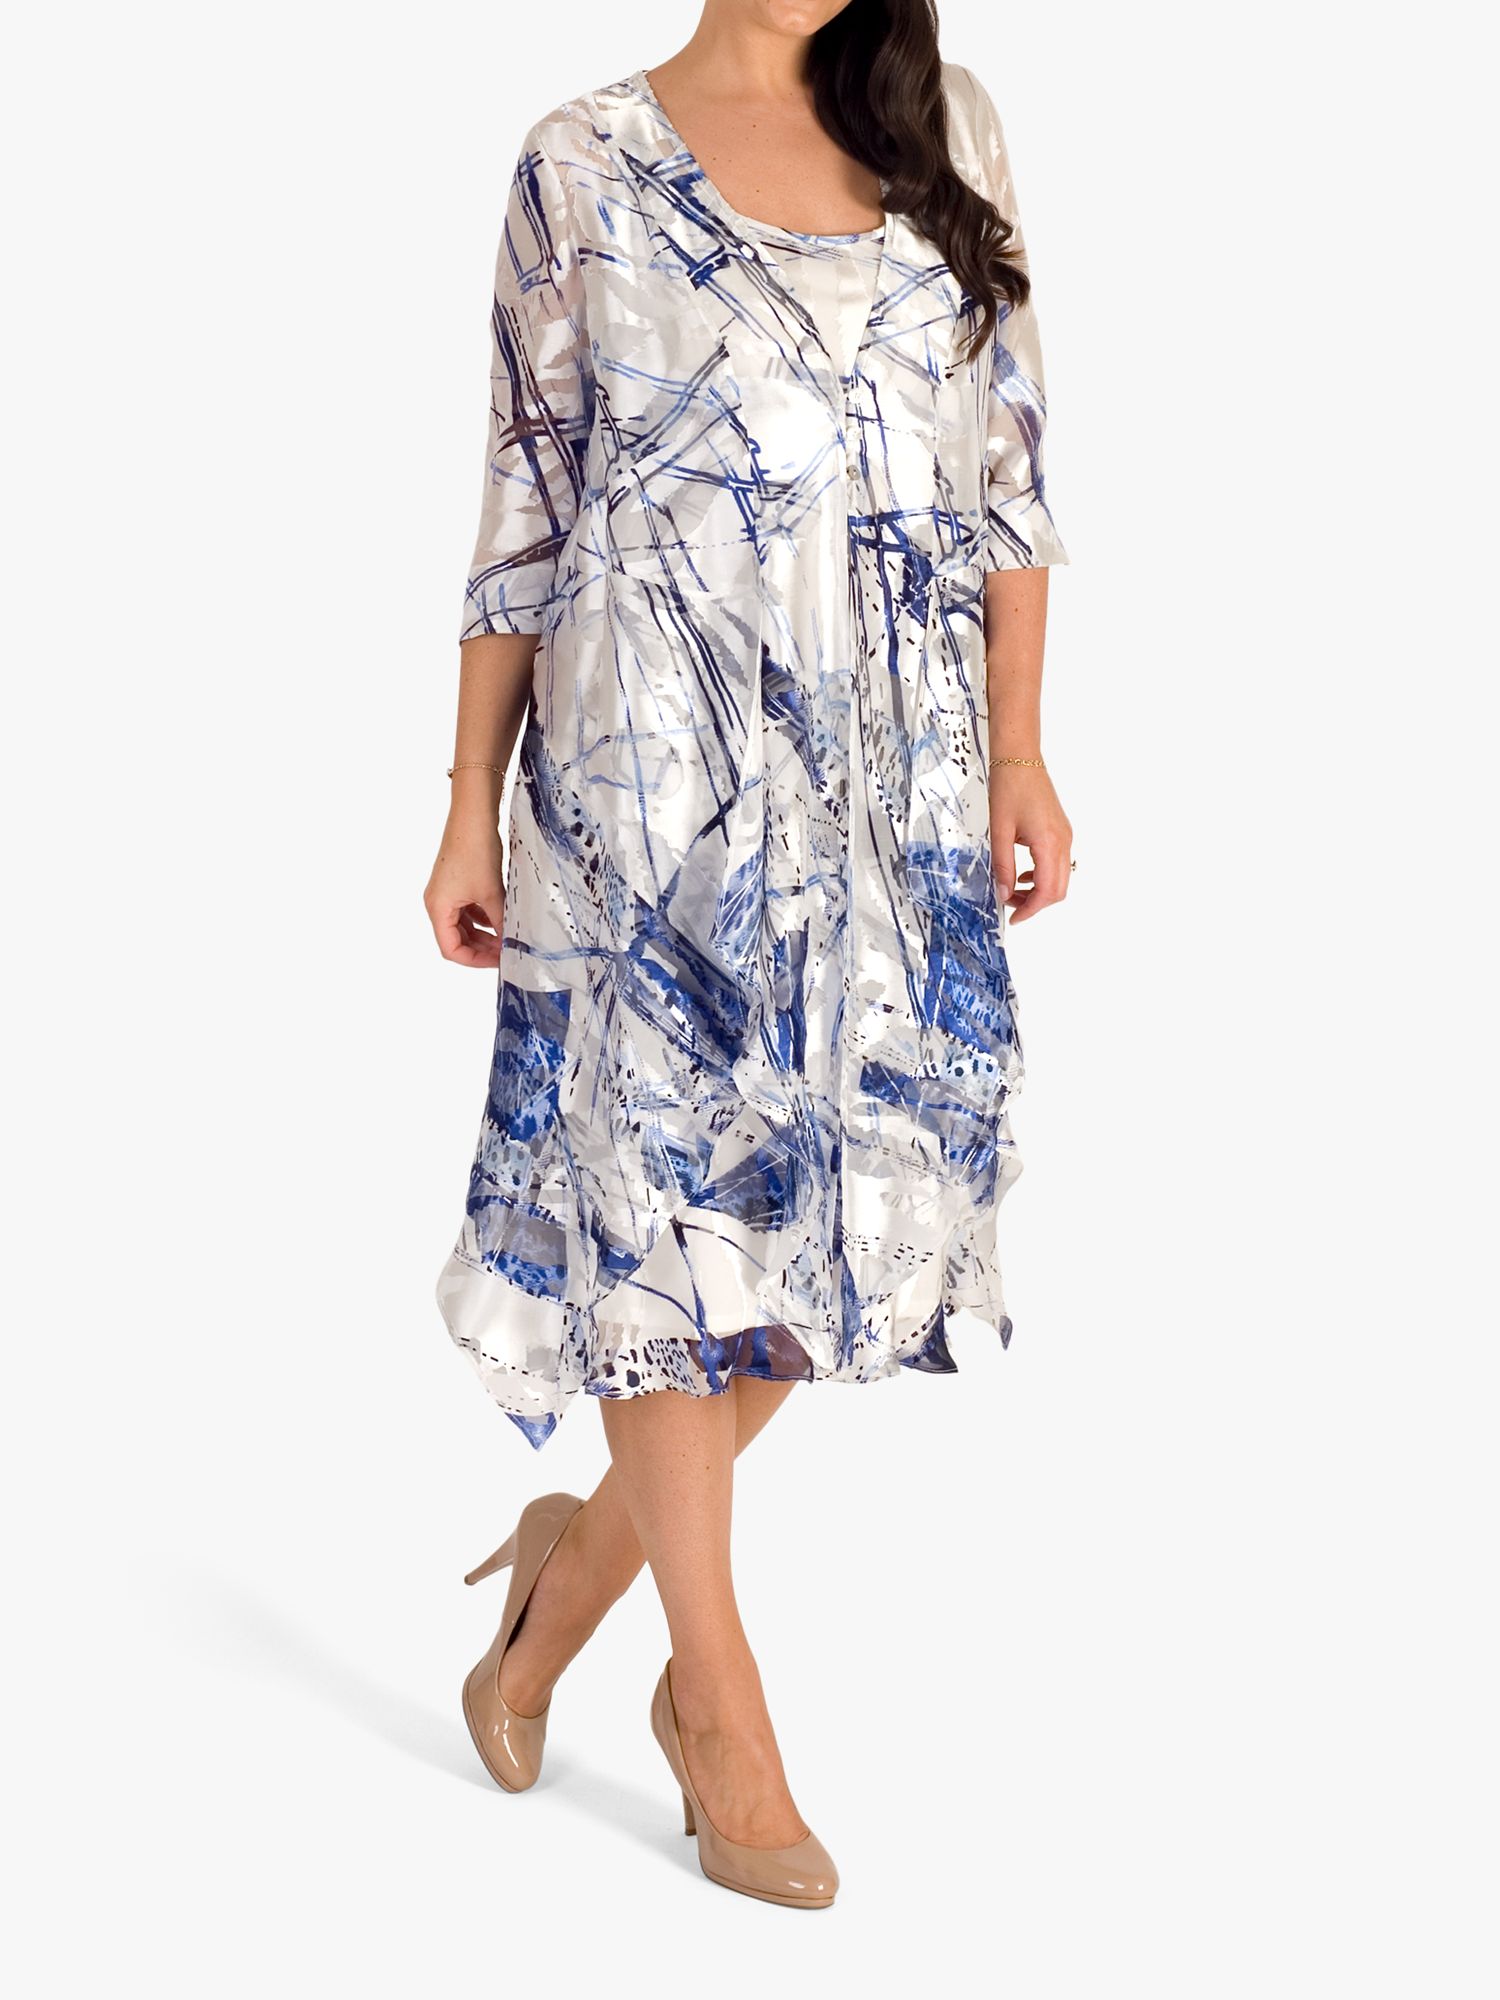 chesca Satin Devoree Abstract Stripe Sleeveless Dress, Ivory/Cobalt, 14